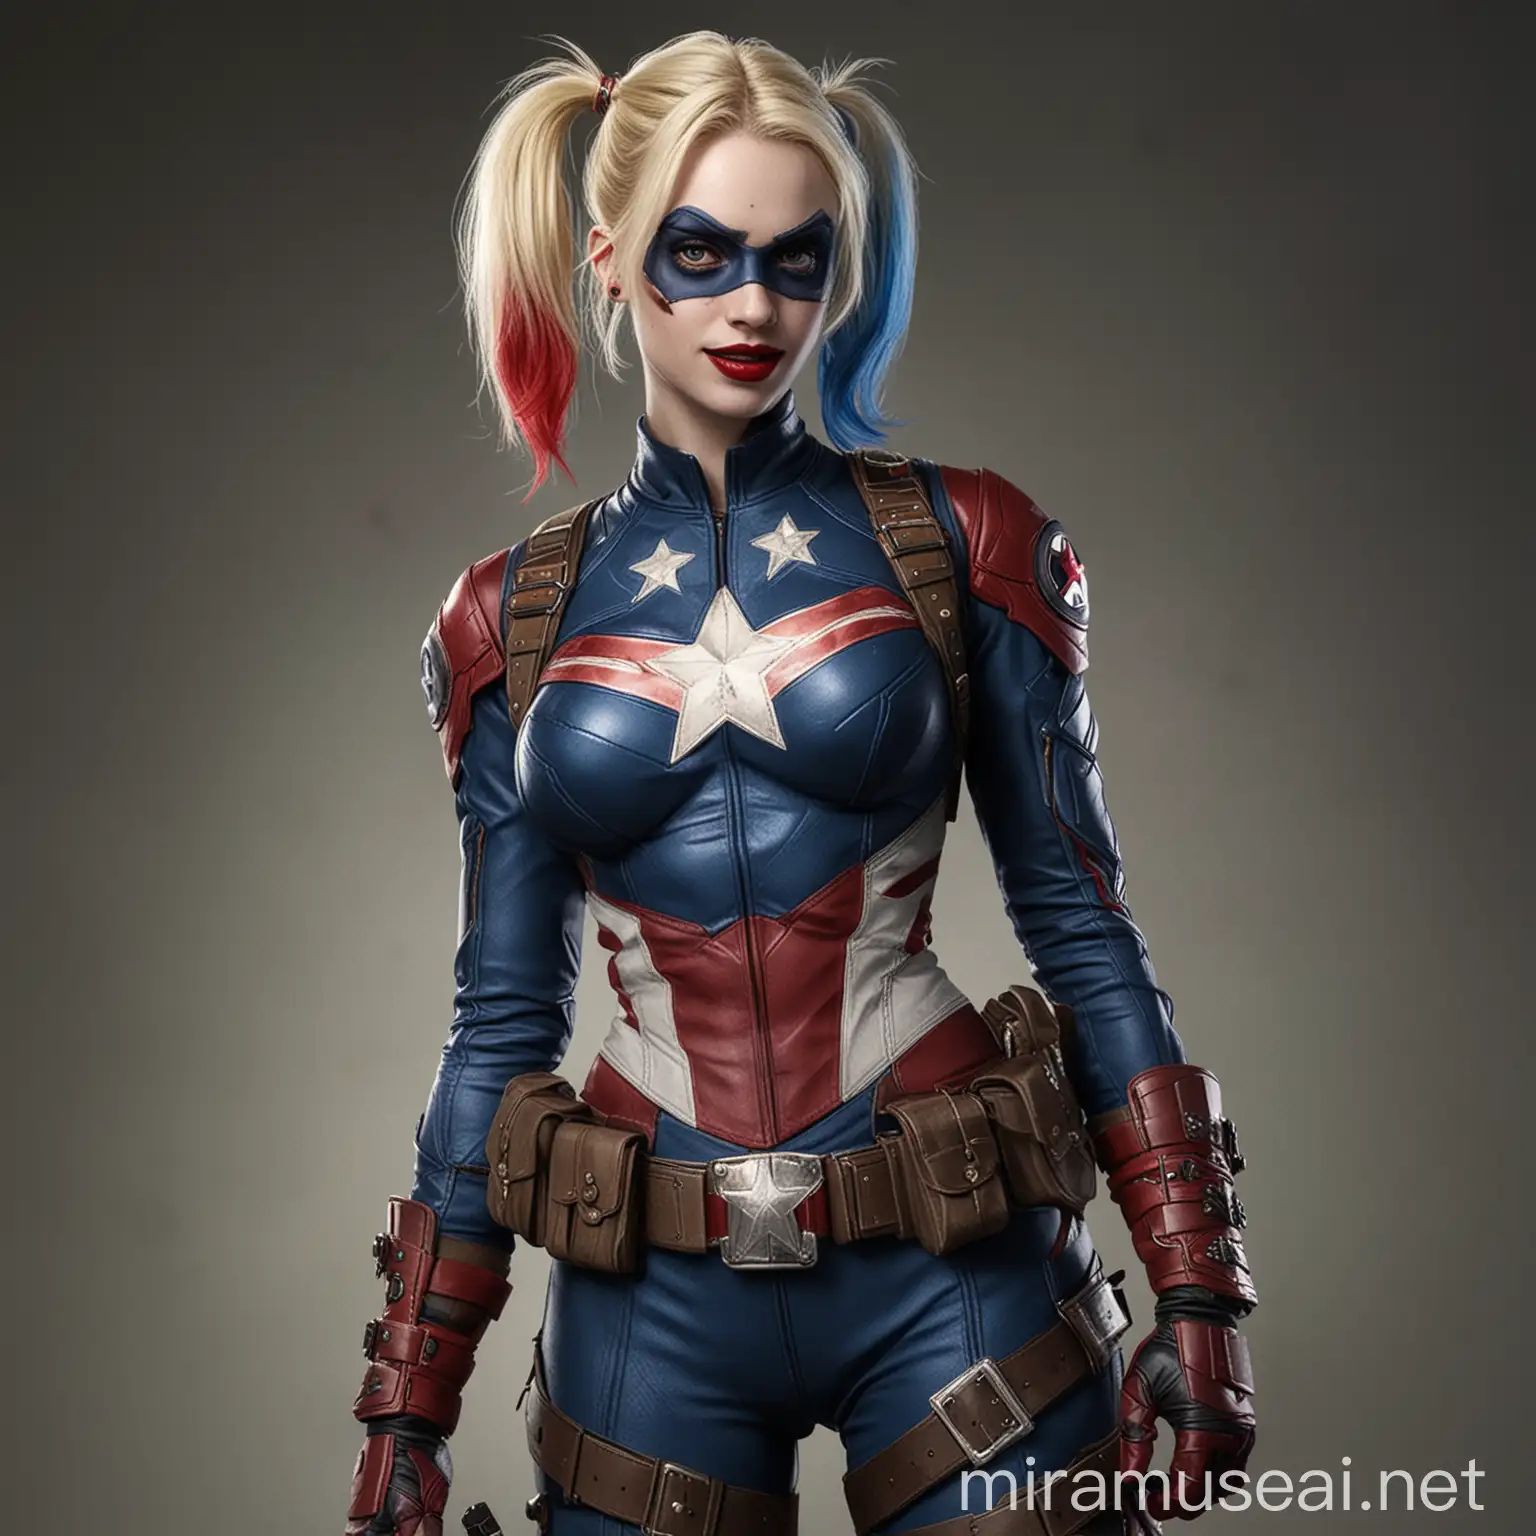 Harley Quinn disguised as Captain America